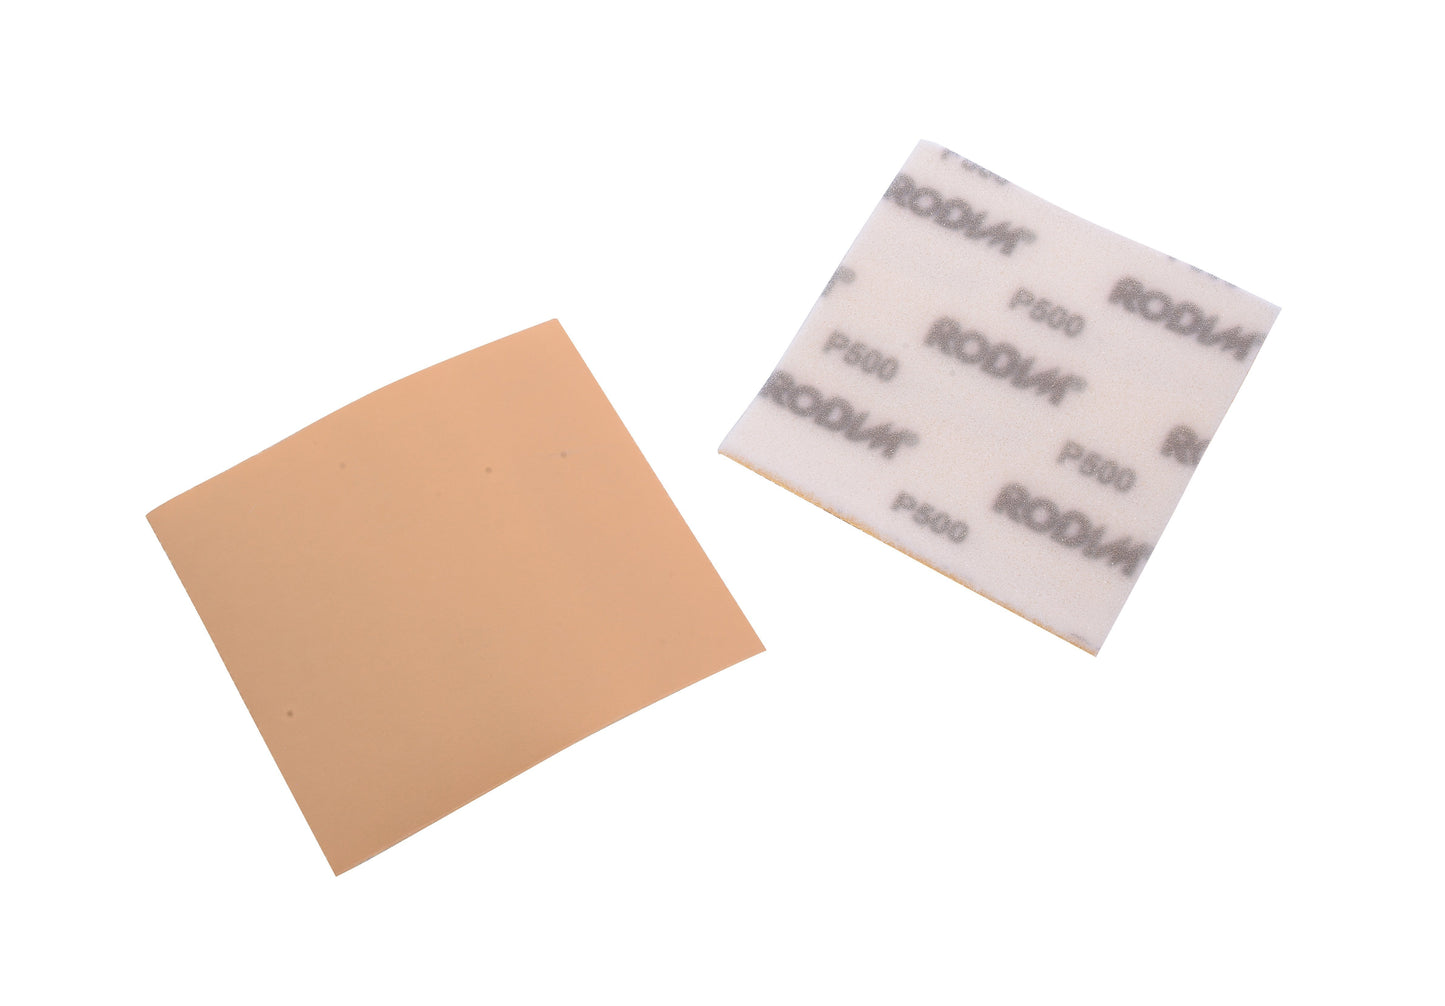 BASF Rodim Flex Soft Foam Roll Sanding Abrasive Paper 115mm x 25m Glasurit Sponge